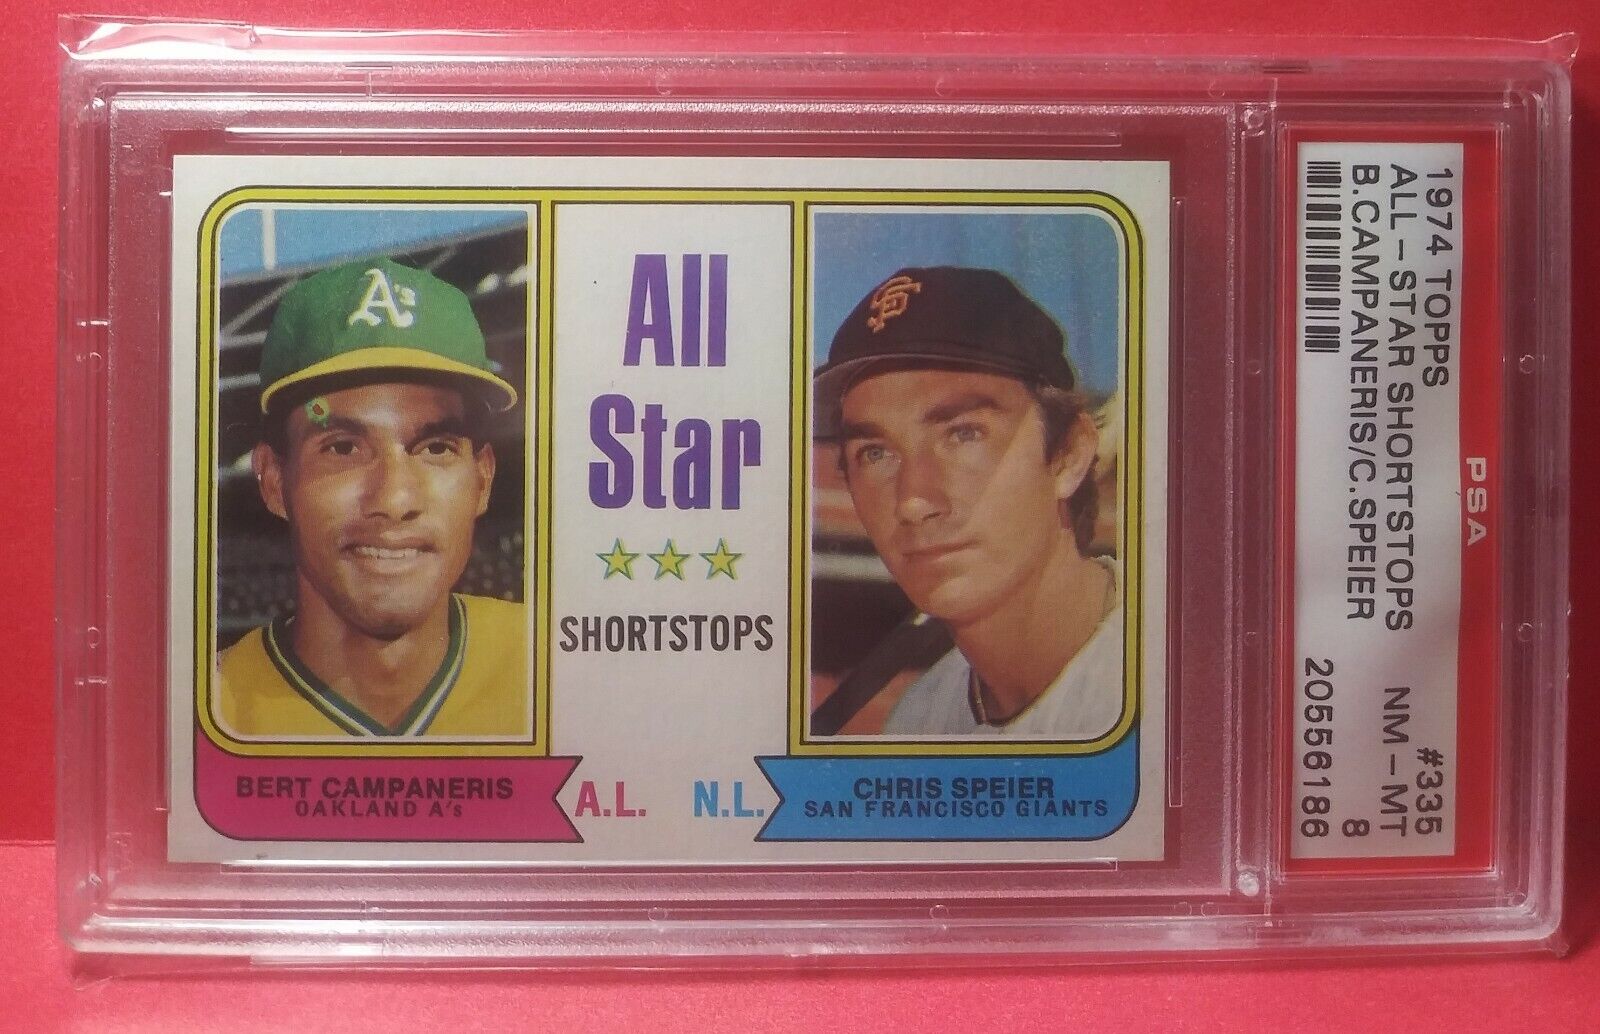 1974 Topps All Star Shortstops Card #335  PSA 8   Bert Campaneris  